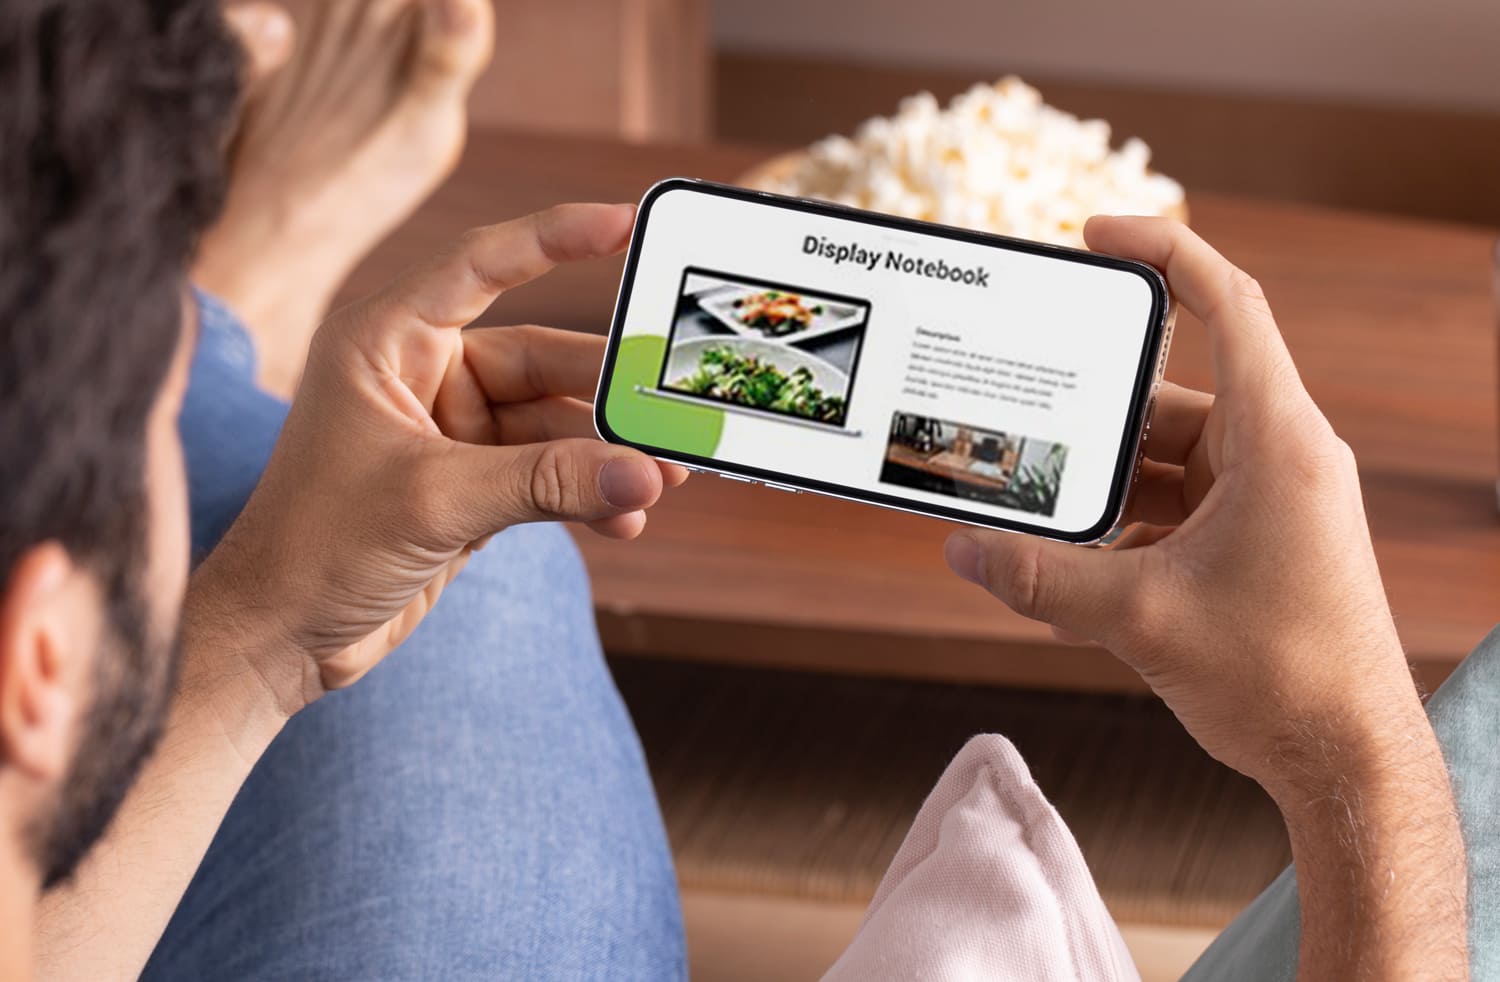 Ruoka Food Powerpoint Template - Mockup on Smartphone.